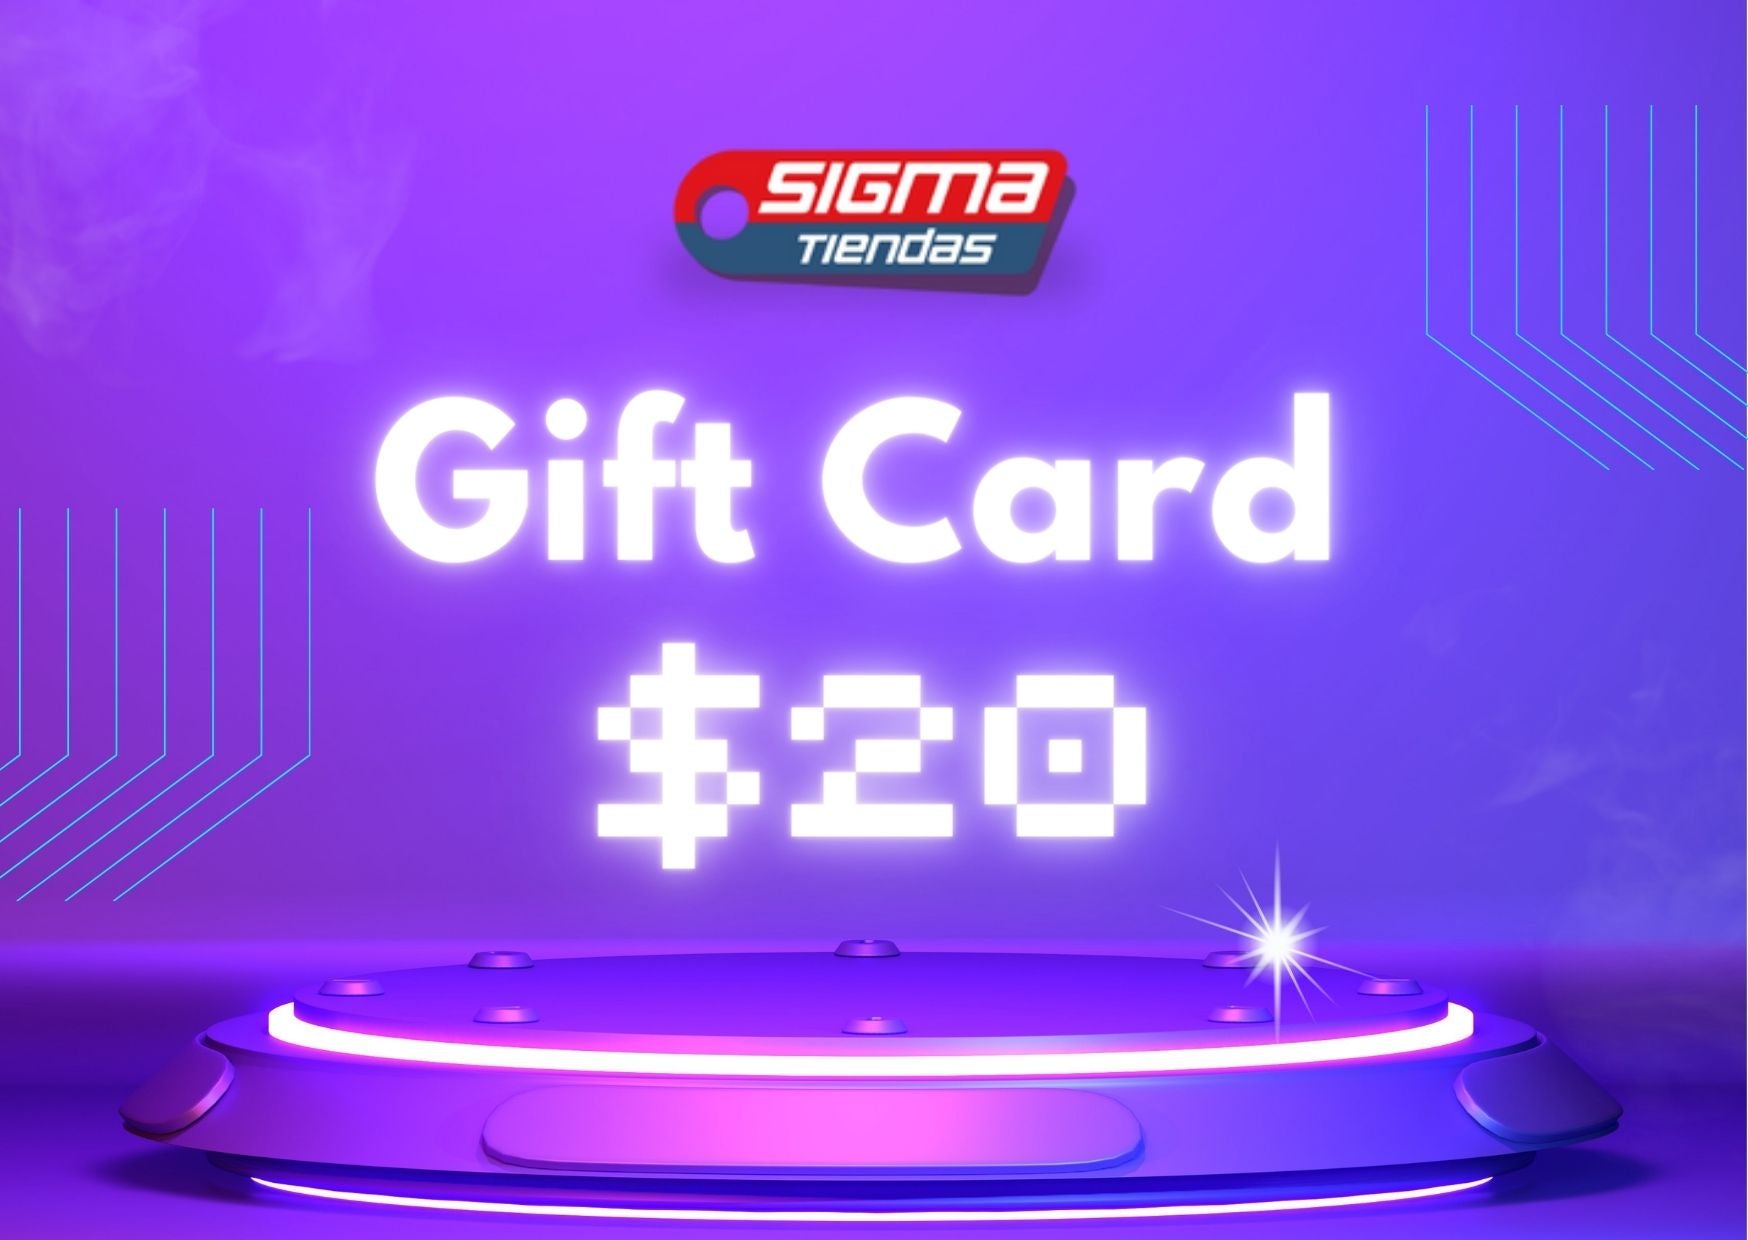 Gift Card Sigma $20